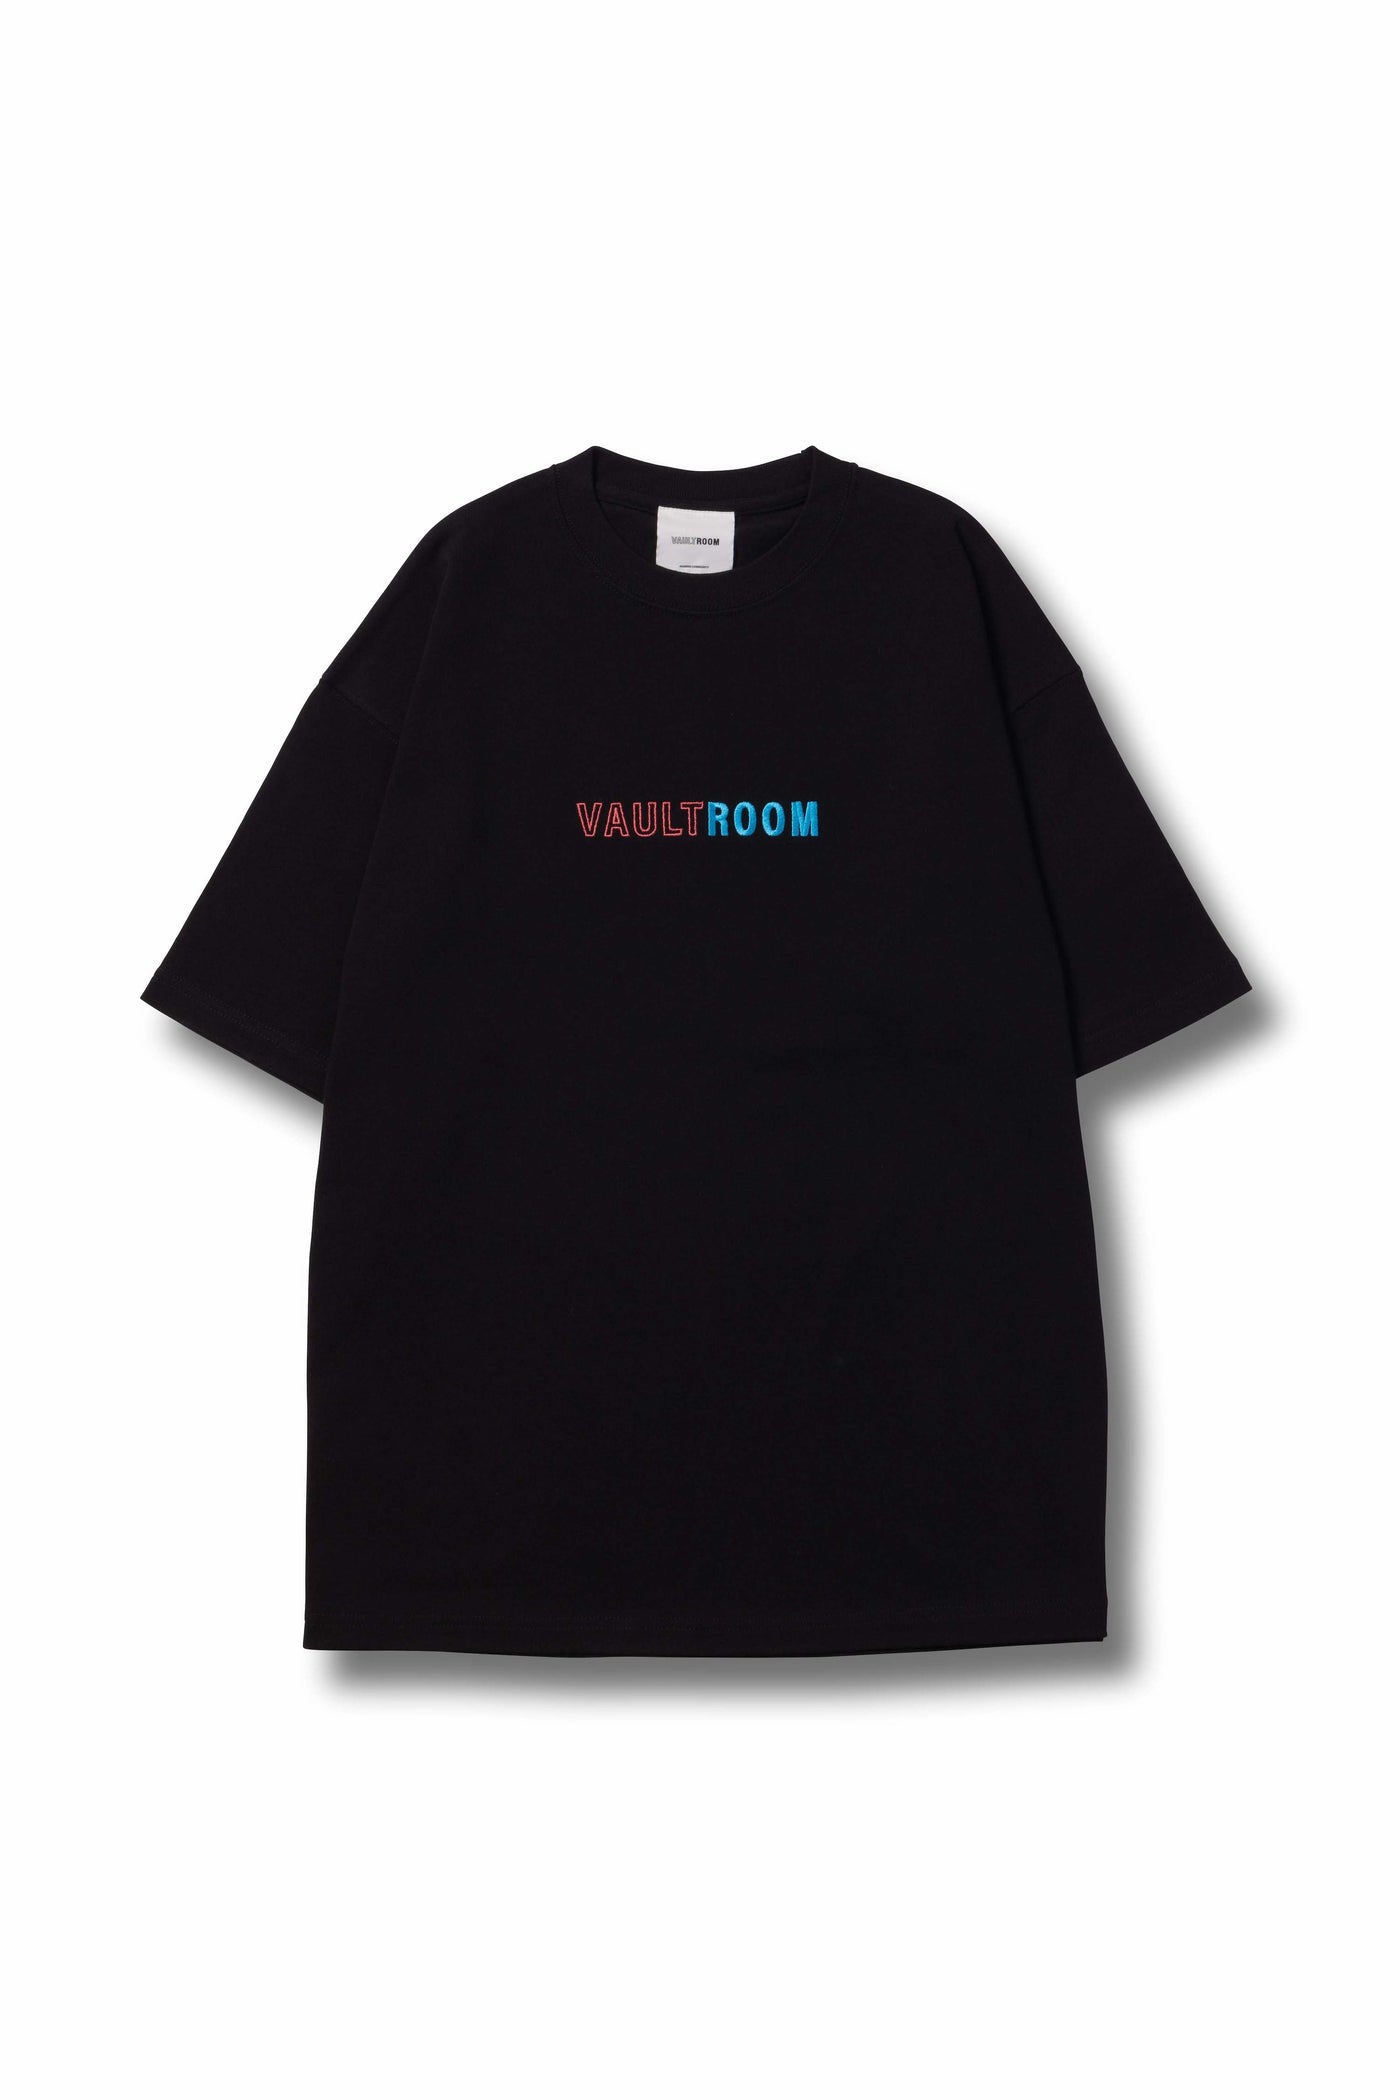 vaultroom 麻婆豆腐T - Tシャツ/カットソー(半袖/袖なし)